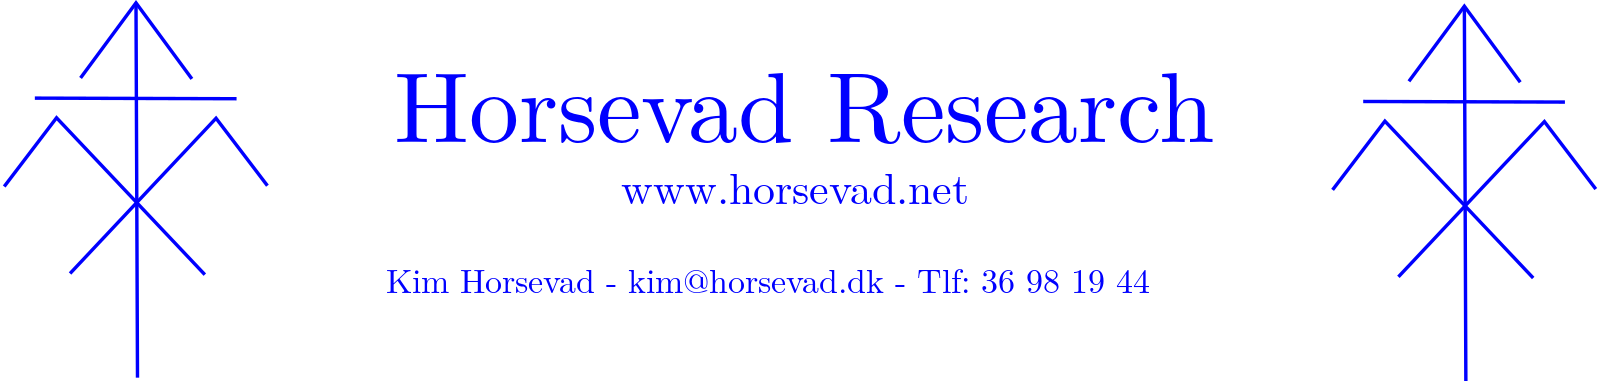 Horsevad Research Logo